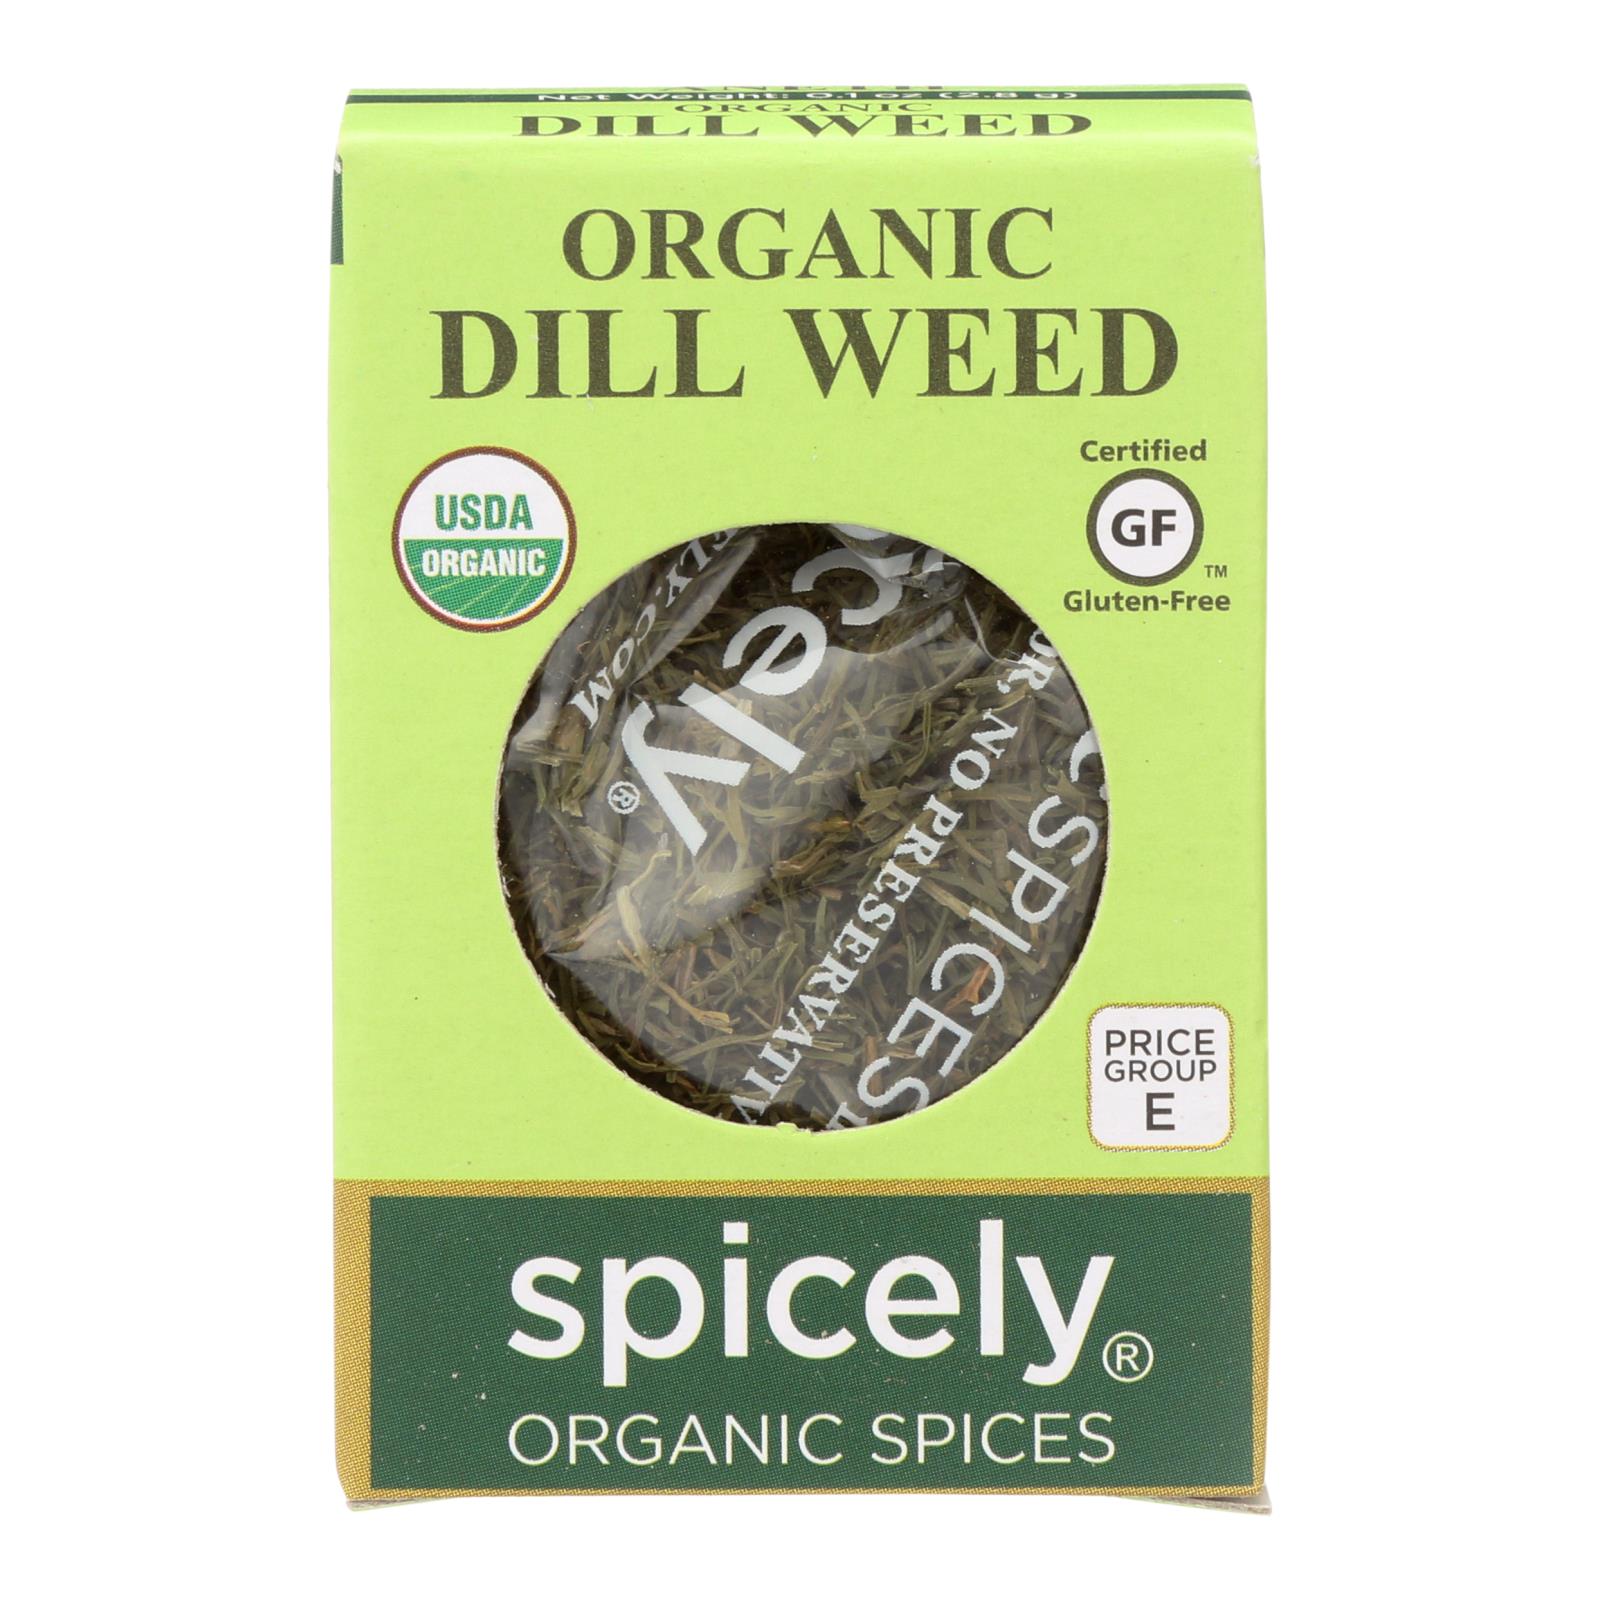 Spicely Organics - Organic Dill Weed - 6개 묶음상품 - 0.1 oz.